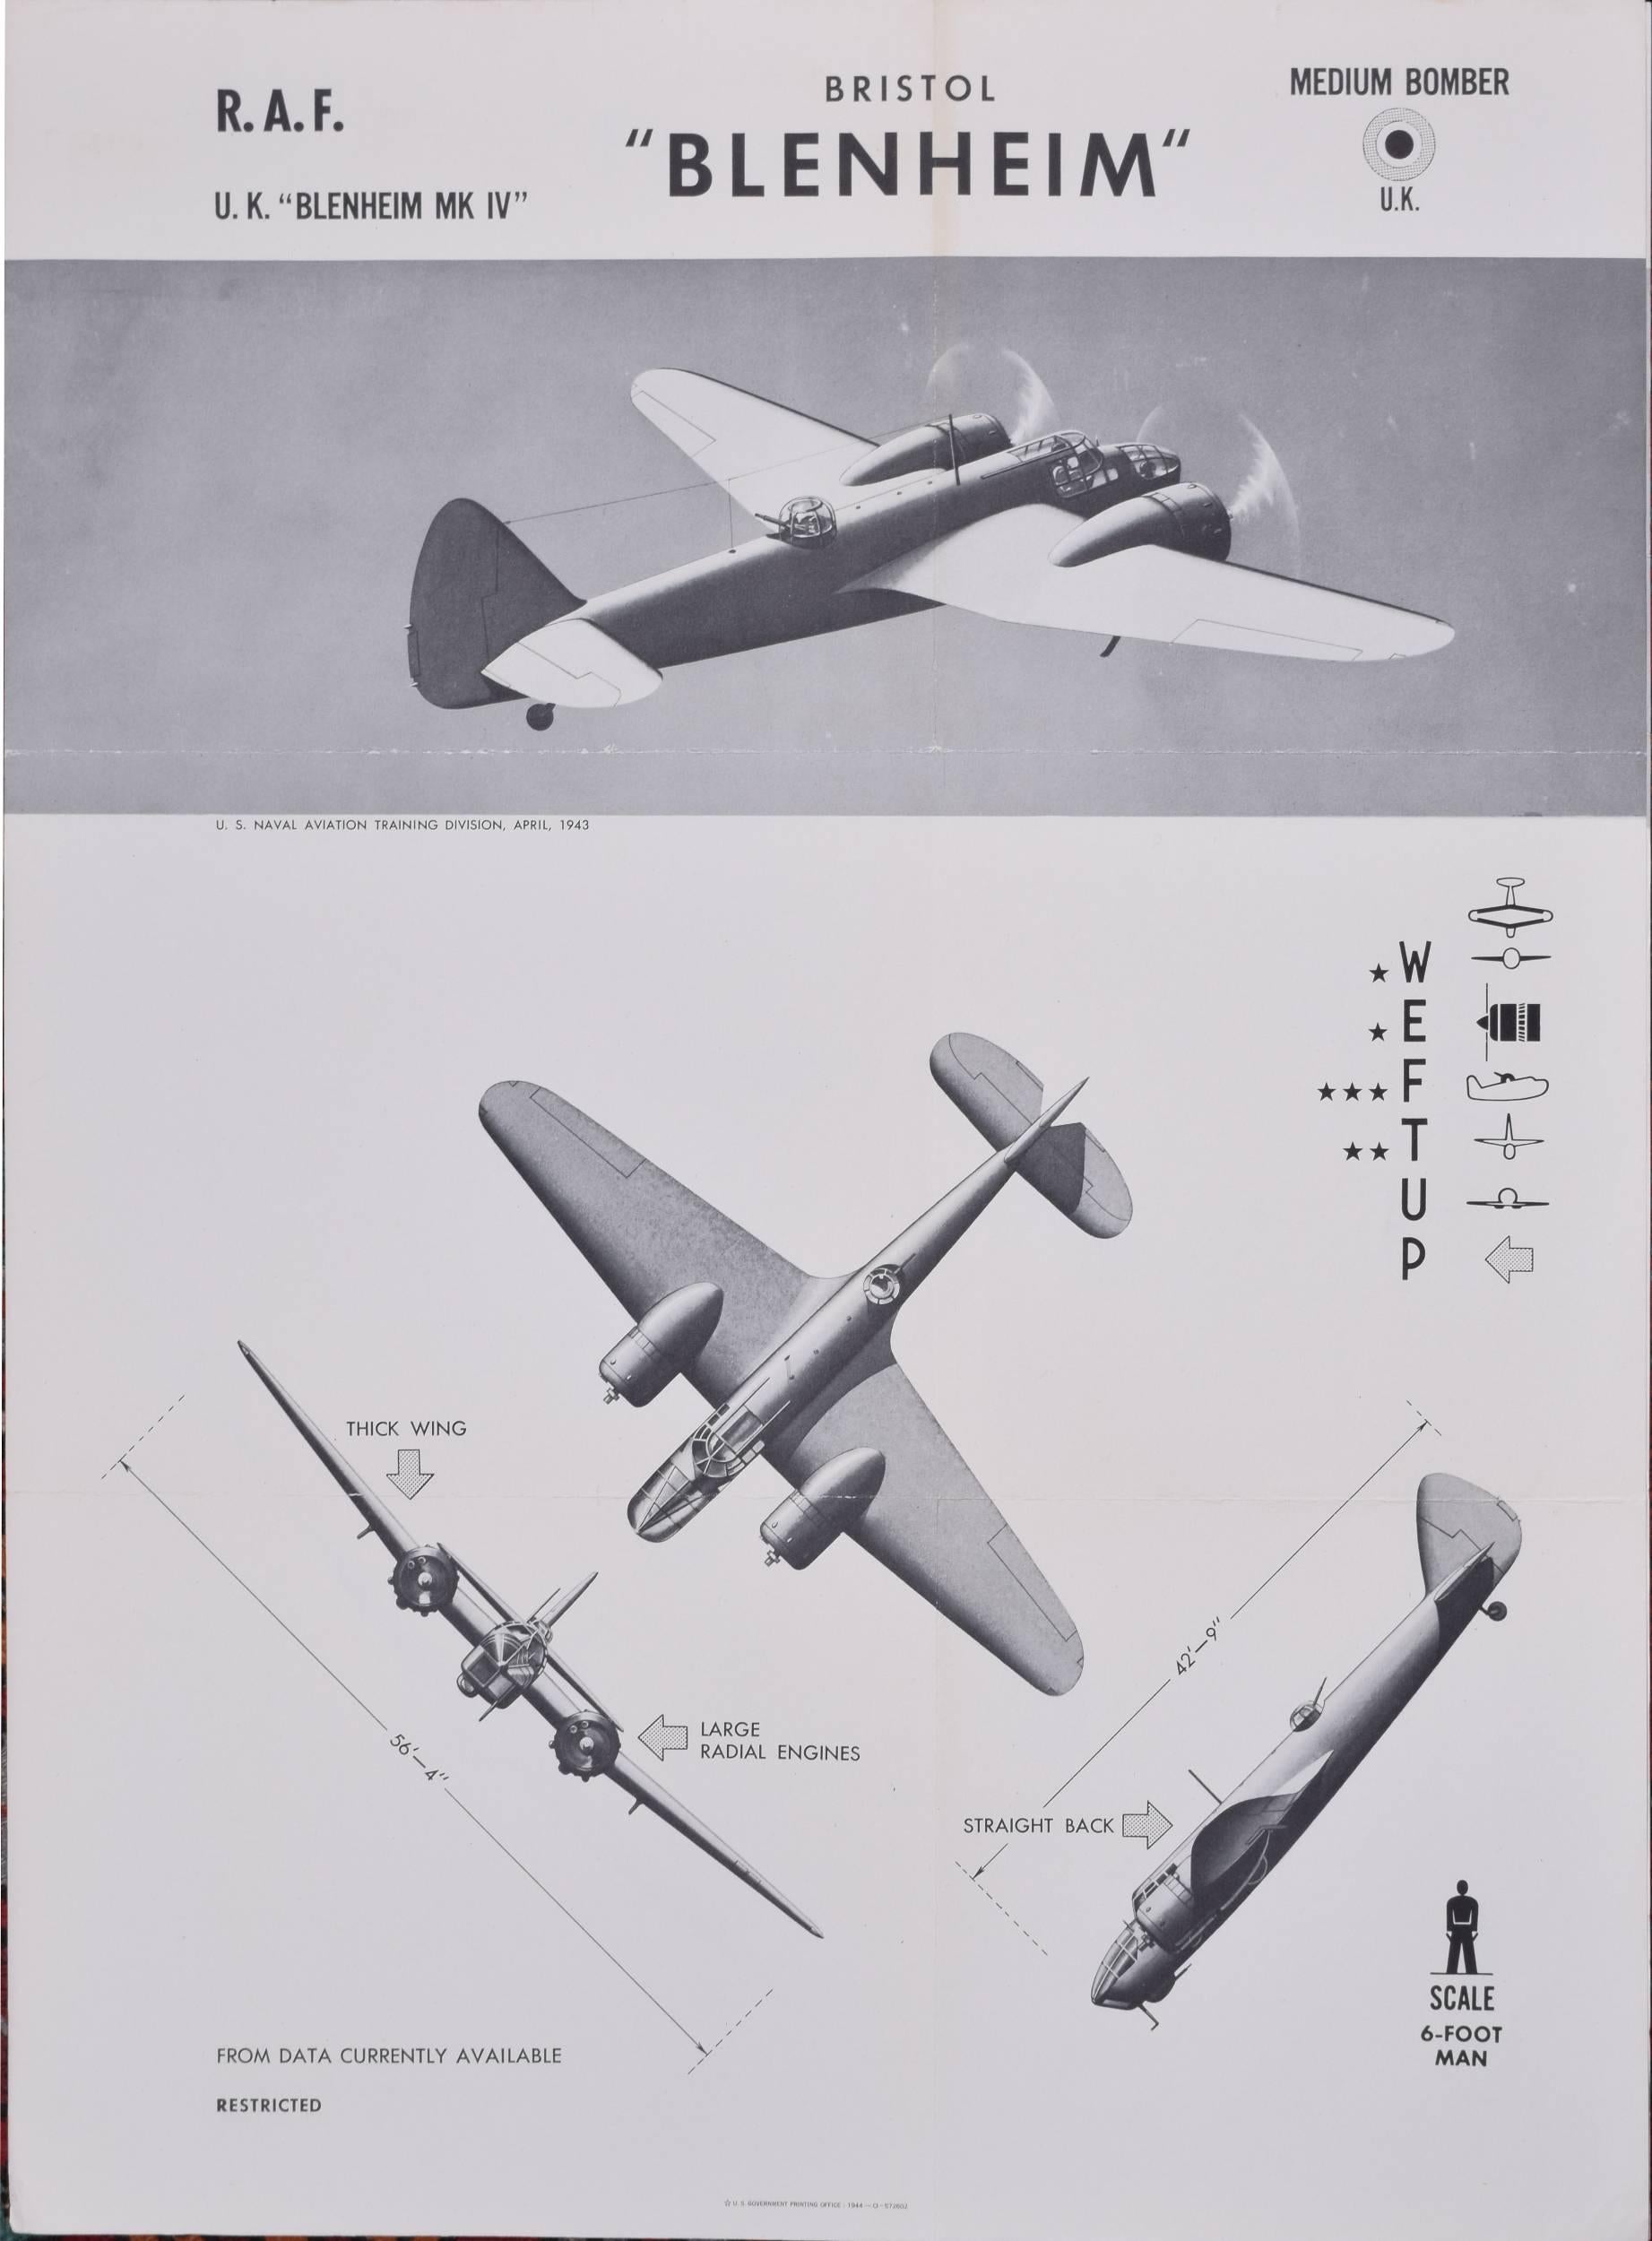 1943 Royal Air Force Bristol Blenheim poster US Naval Aviation Training Division